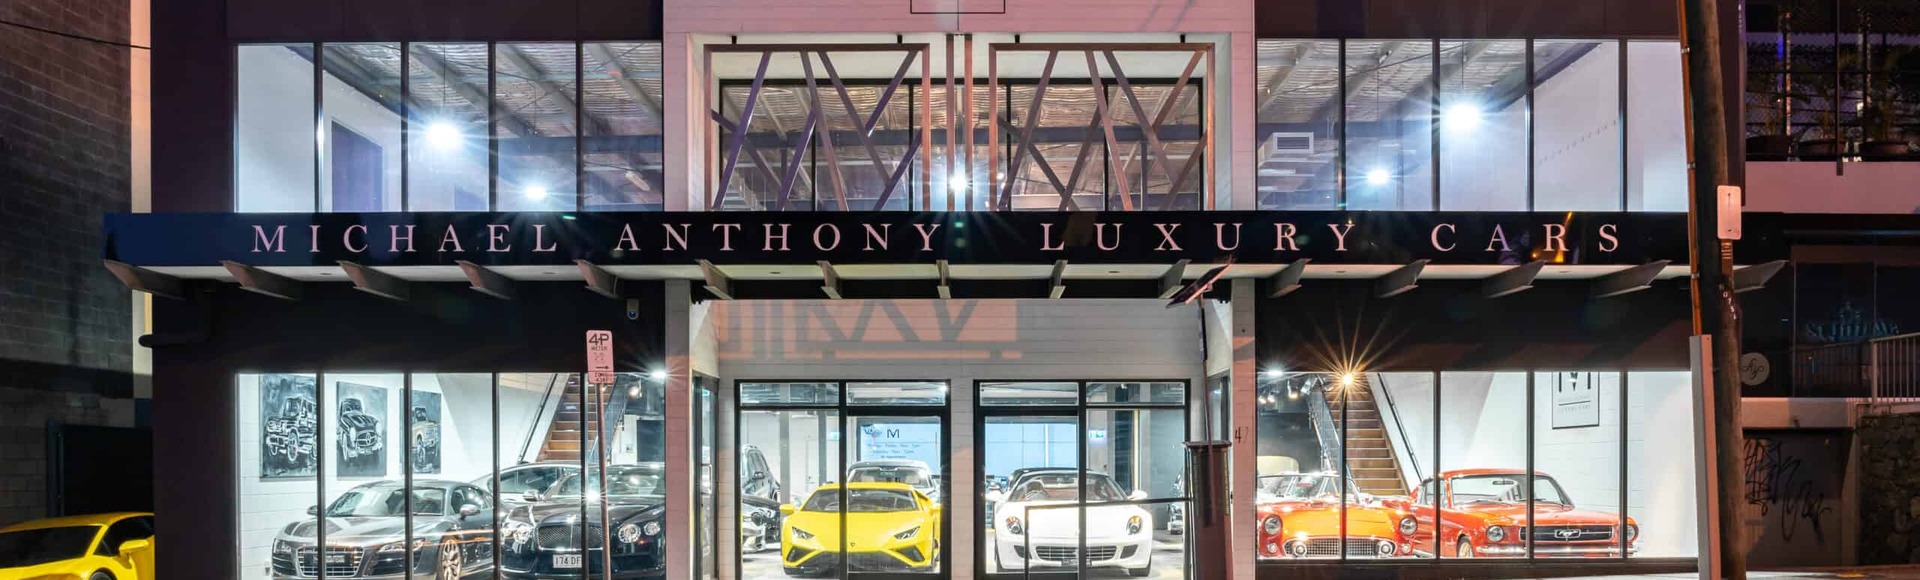 Michael Anthony Luxury Cars